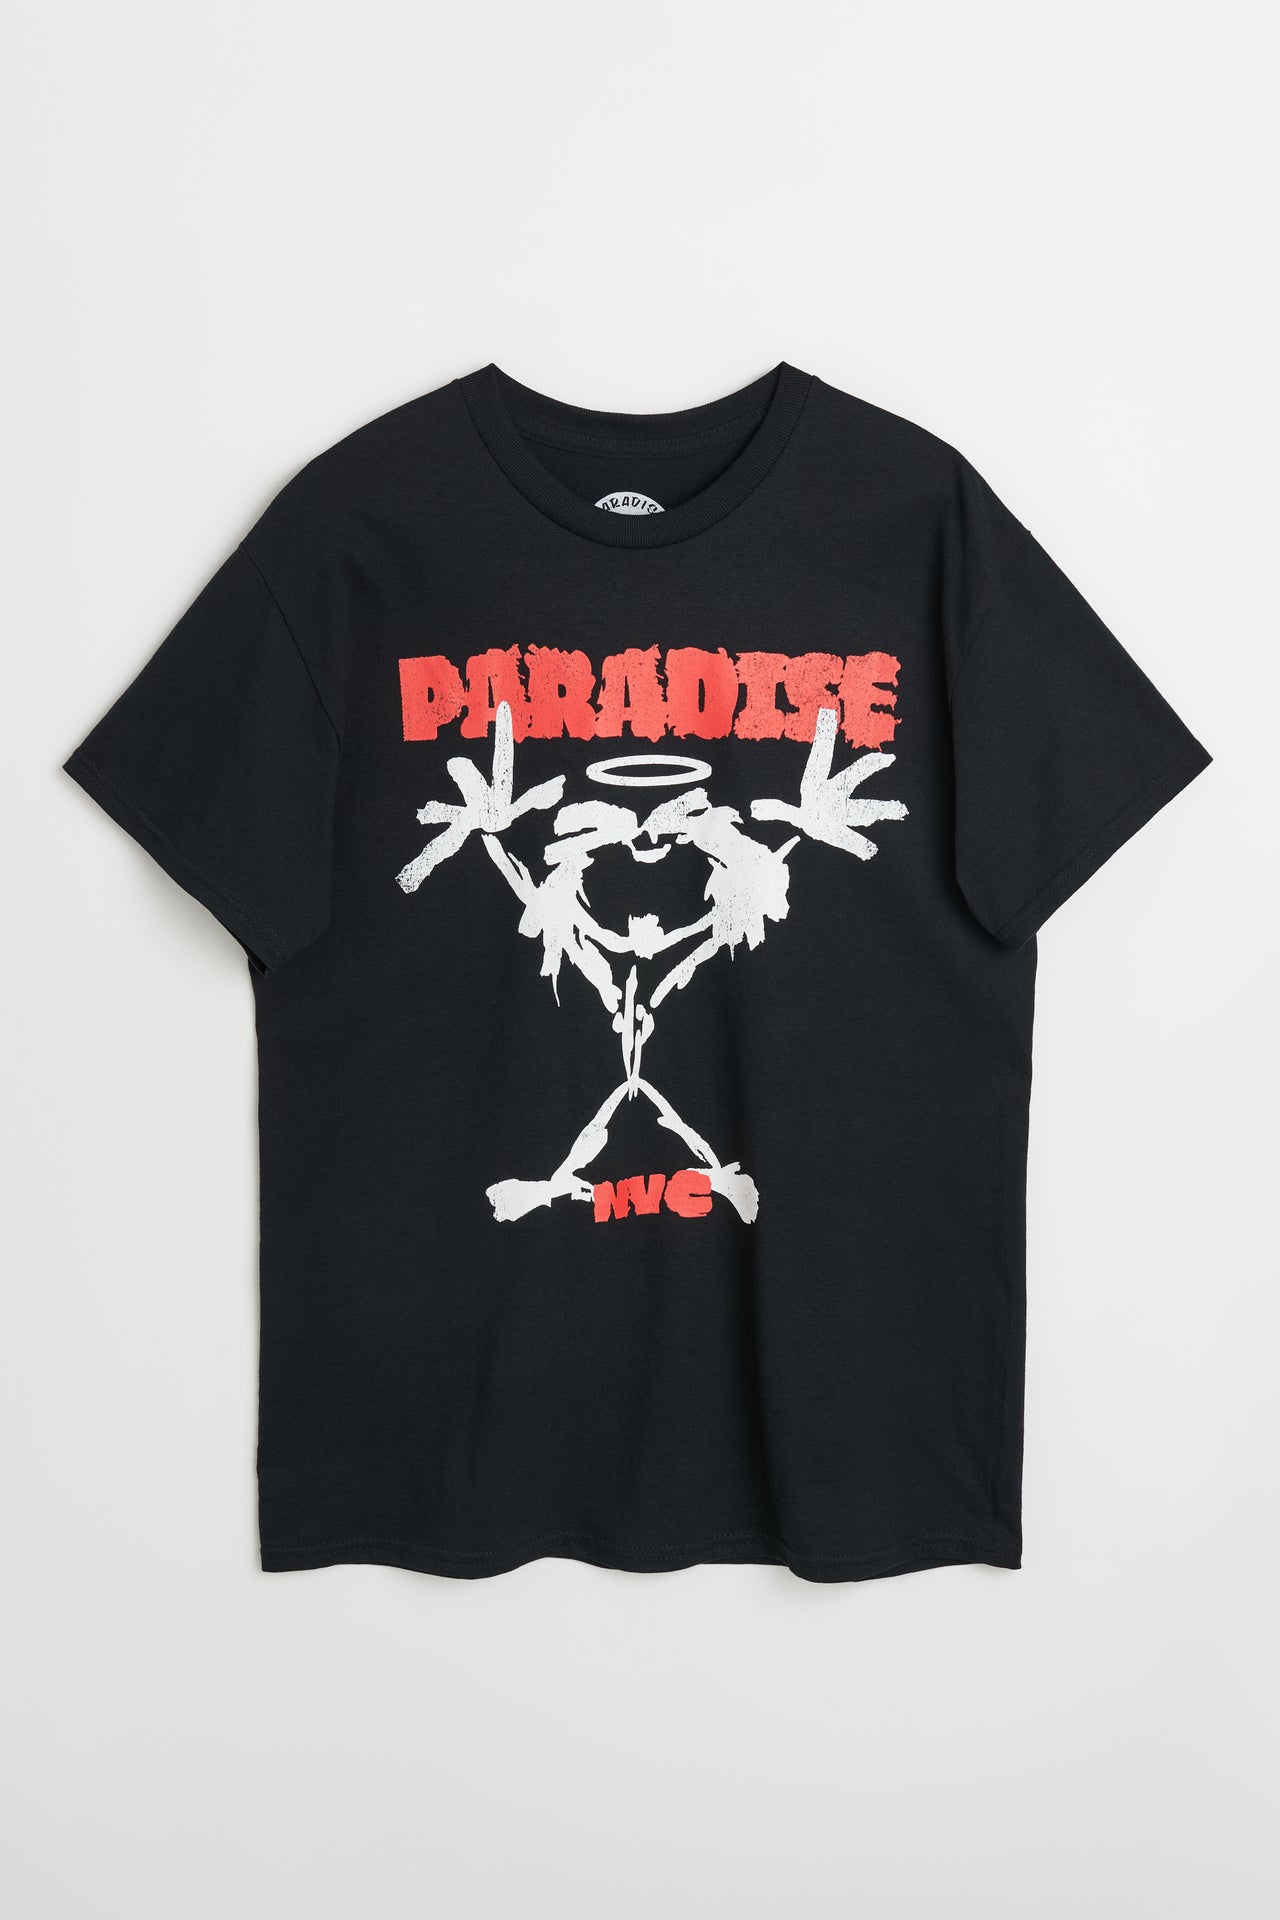 Paradise Jam T-shirt Black